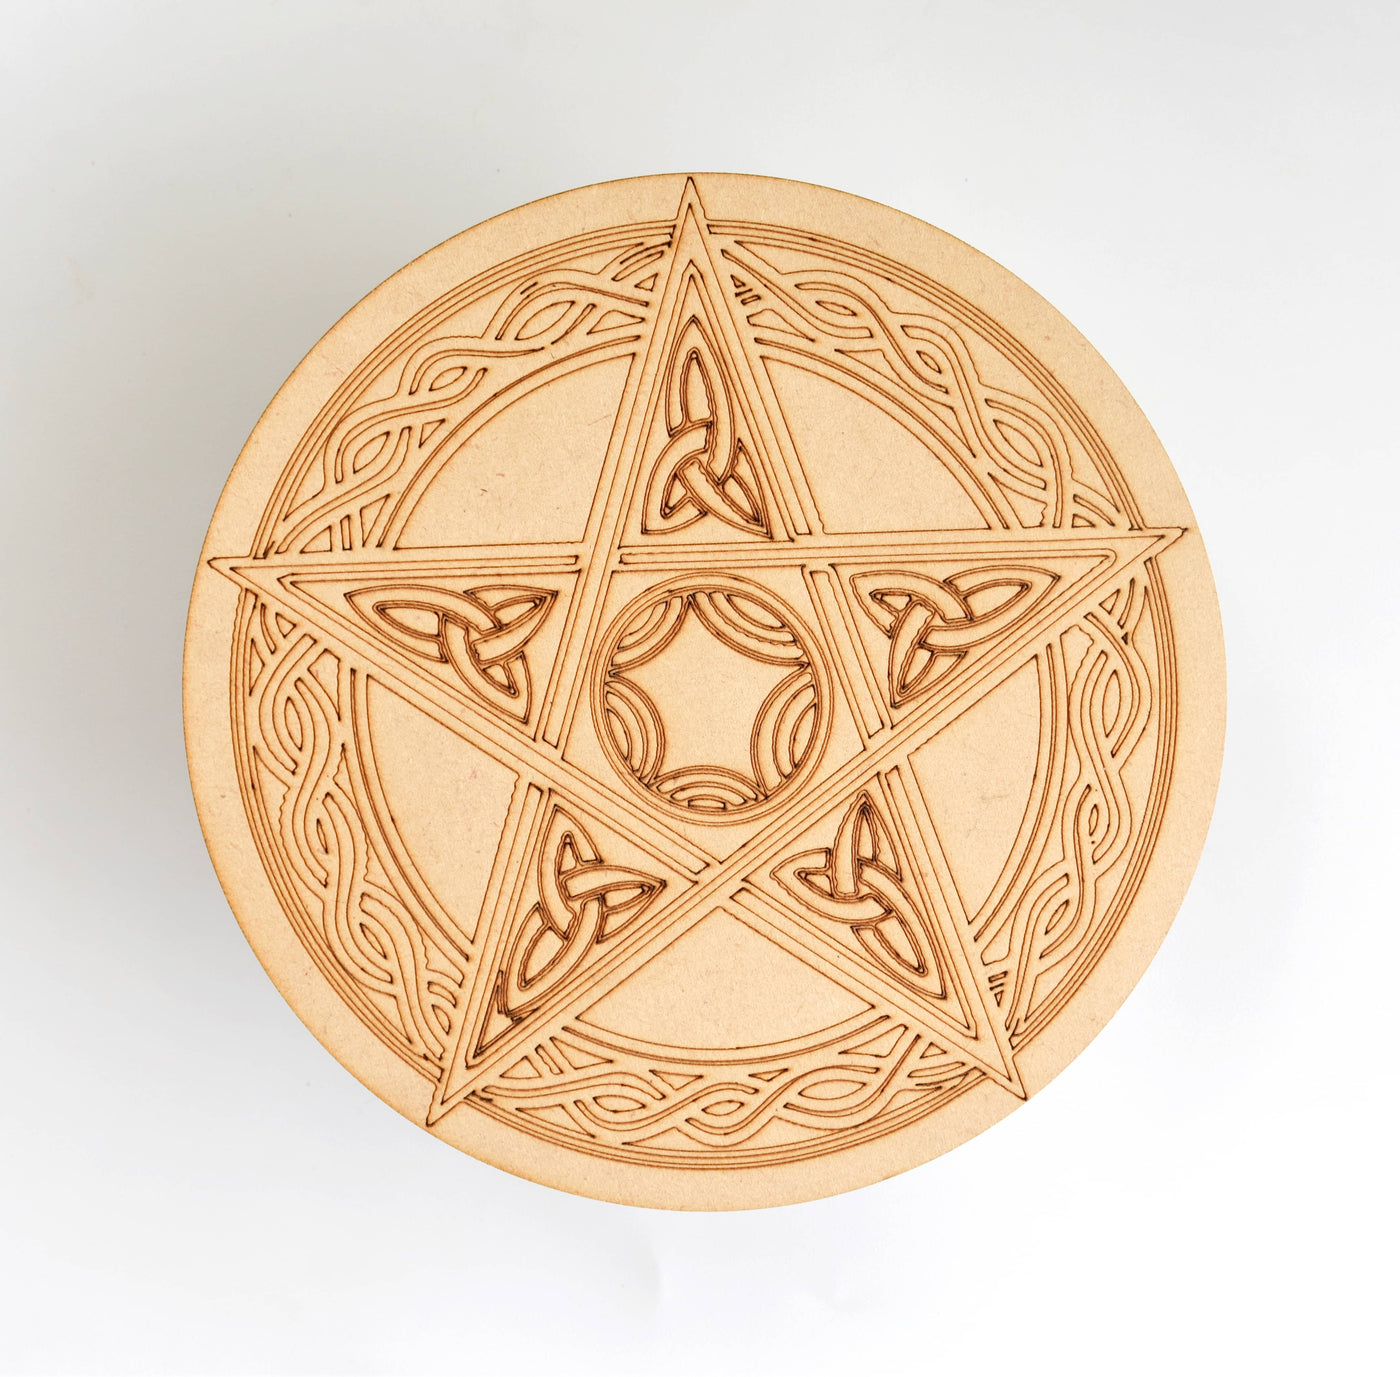 Engraved Zodiac Signs Crystal Grid Board, 6" Wooden Crystal Grid Plate